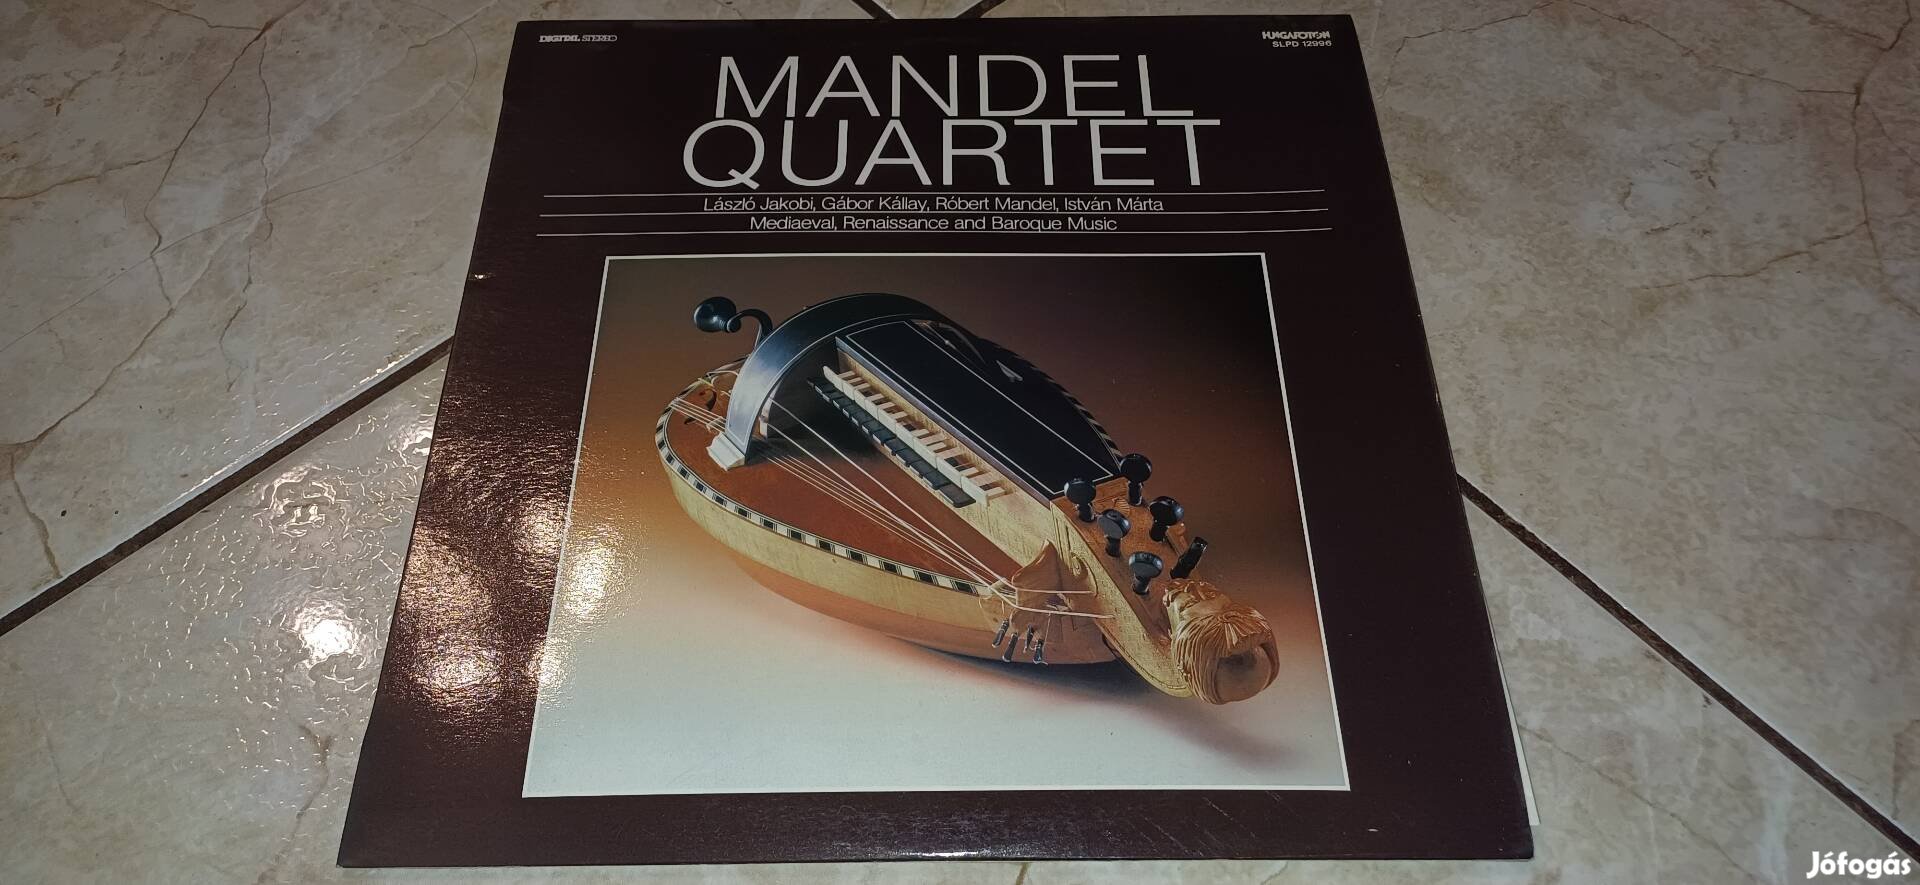 Mandel quartet bakelit lemez